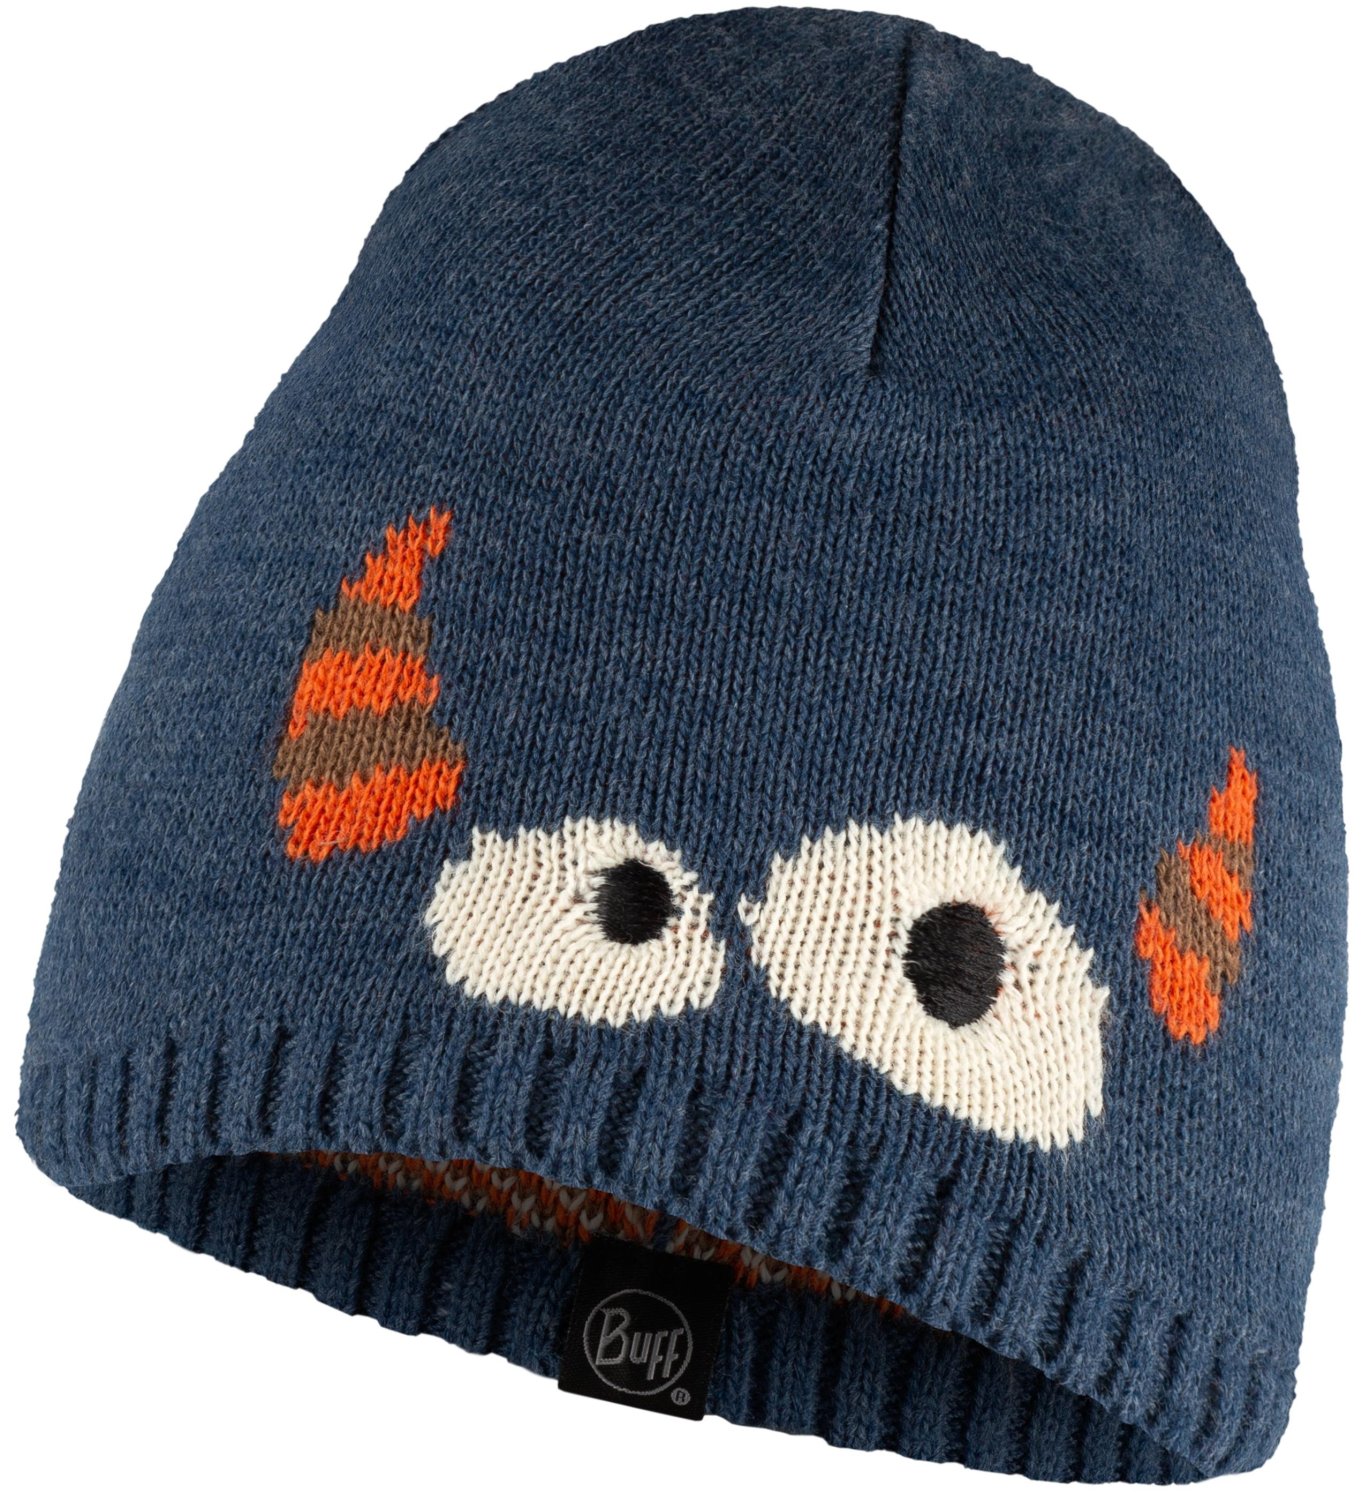 Шапка Buff Knitted Hat Bonky Eyes Denim US:one size, 129626.788.10.00 софтбокс falcon eyes ssa sbu 7575 для вед всп